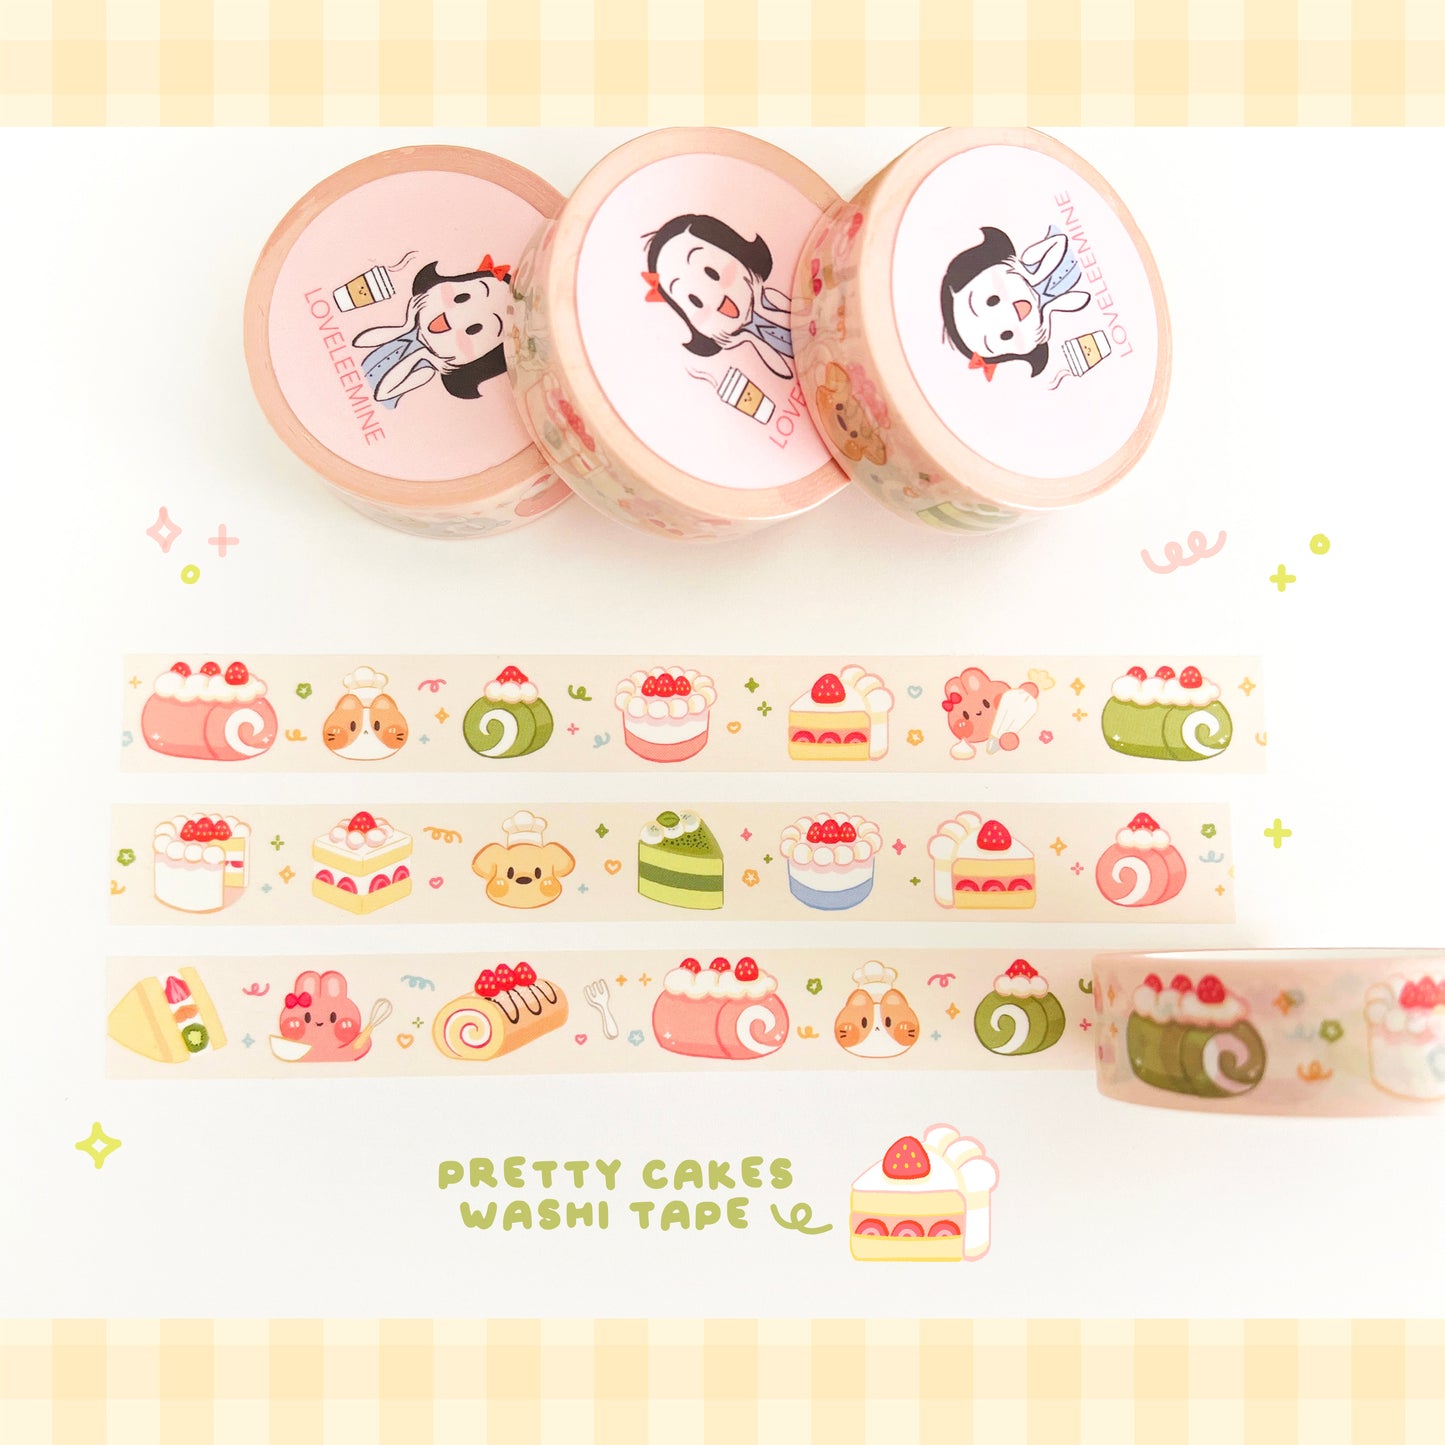 Pretty Cakes Washi Tape